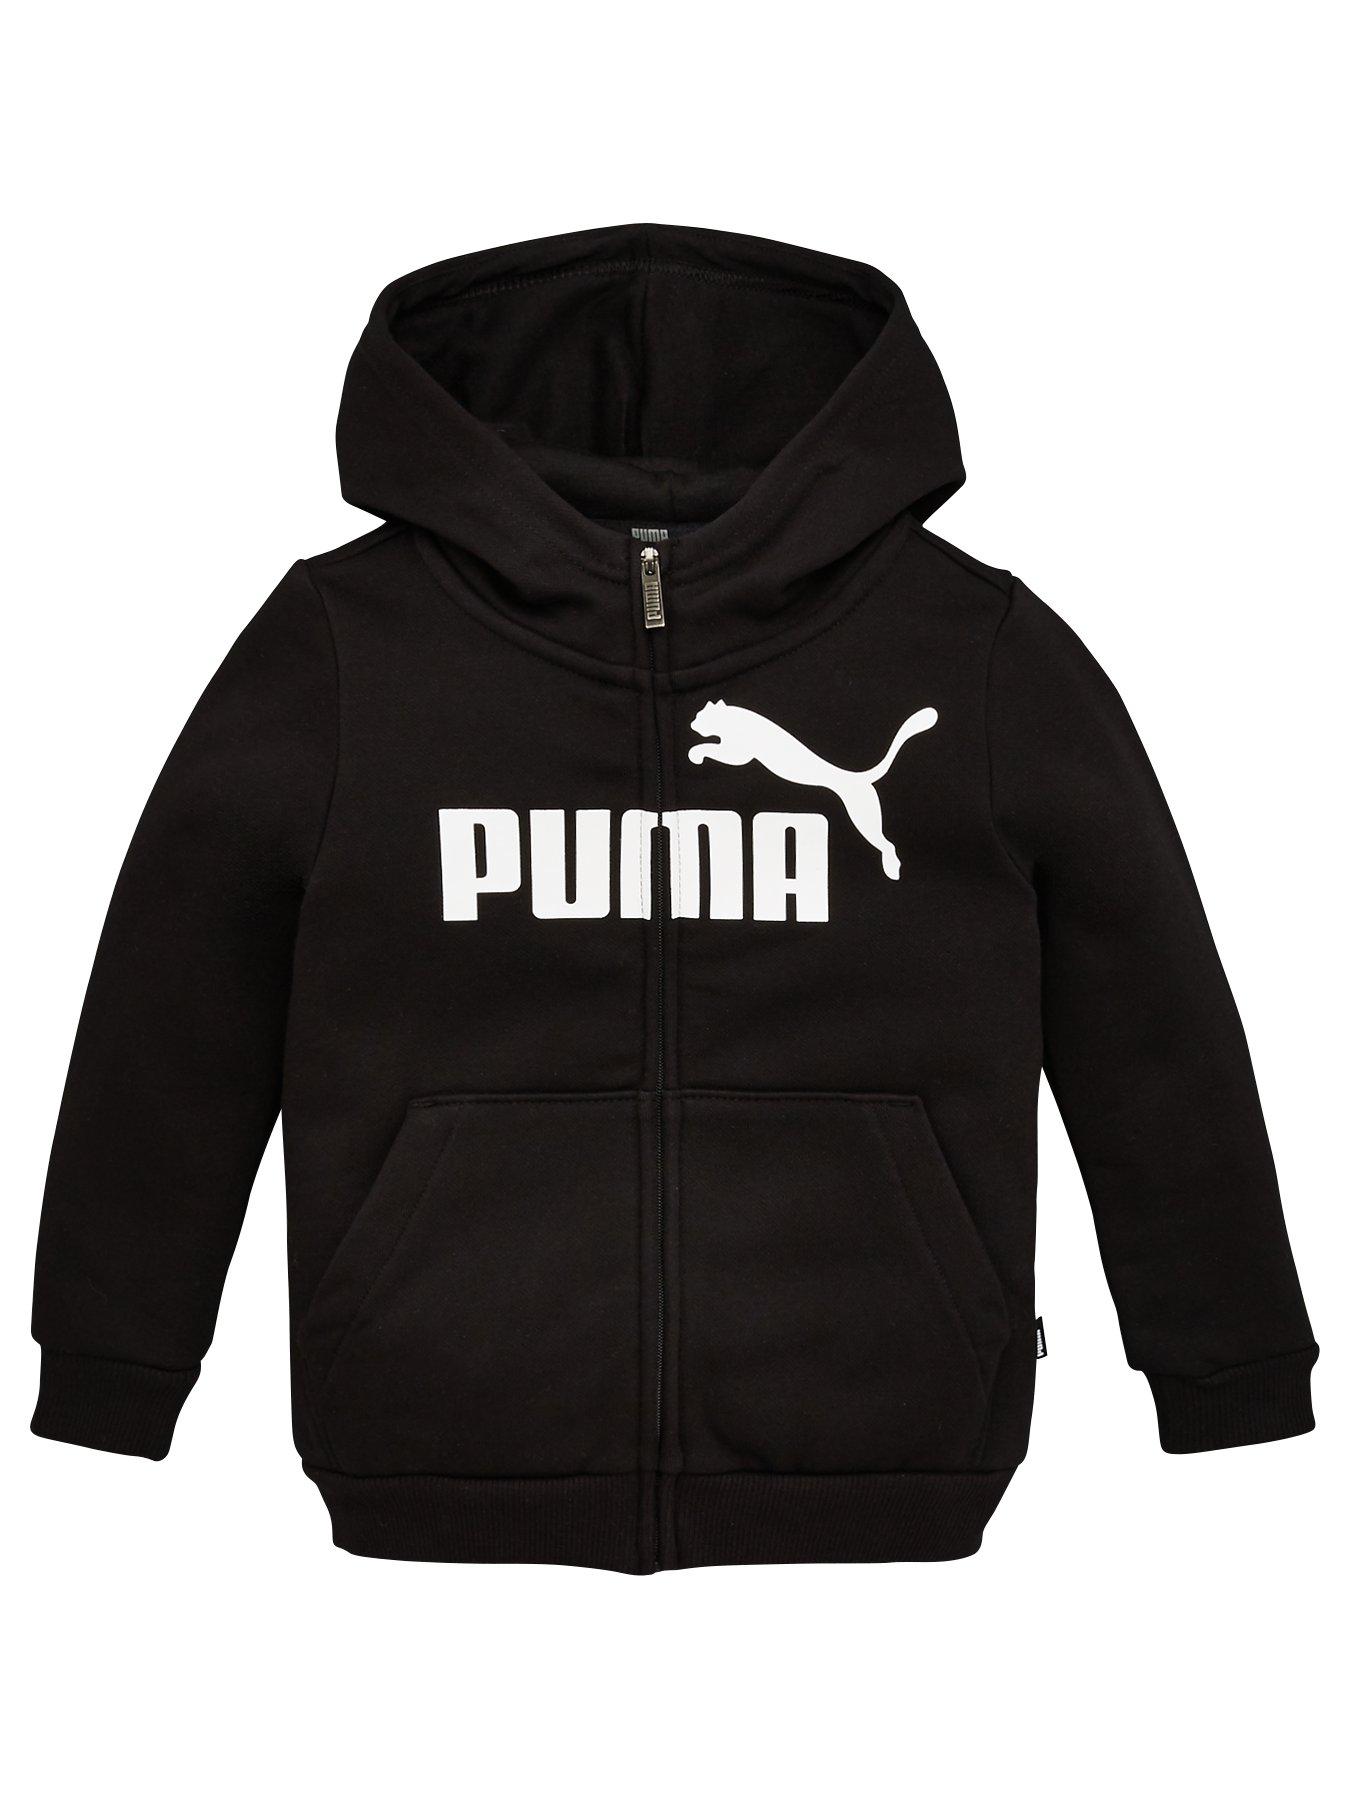 puma girls clothes